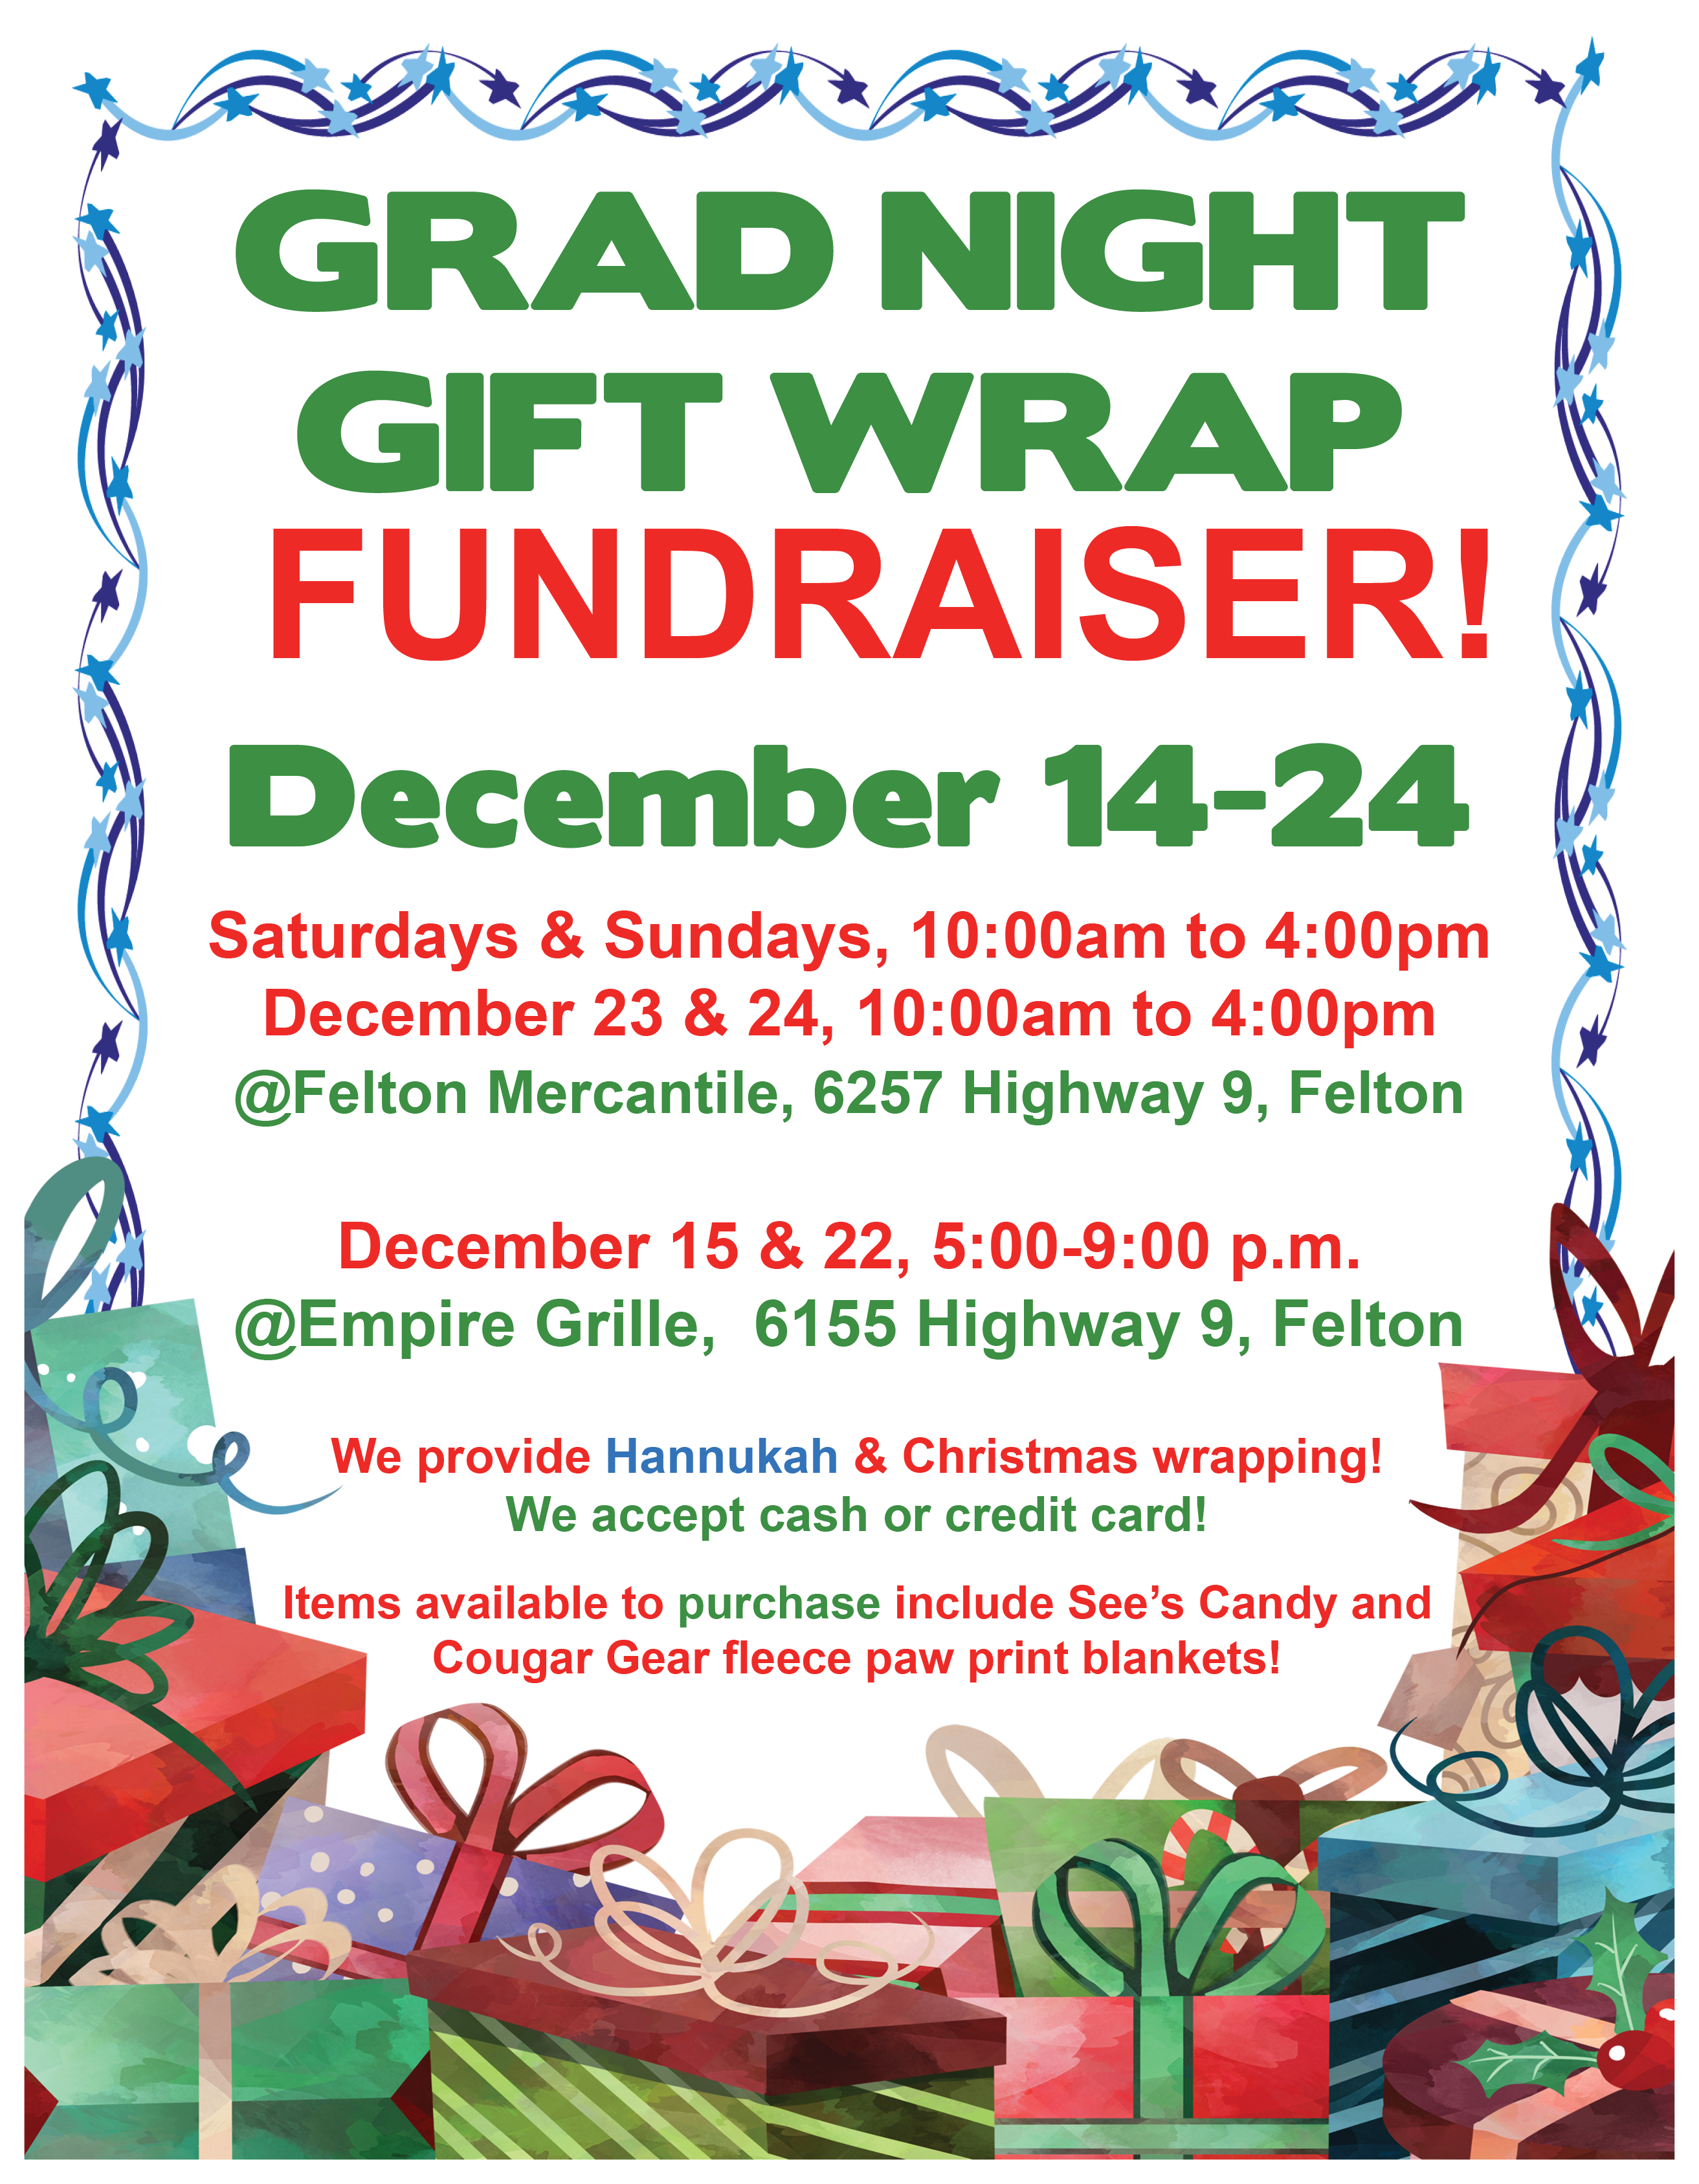 grad night gift wrap fundraiser Dec 14-24; call 335-4425 x210 for info